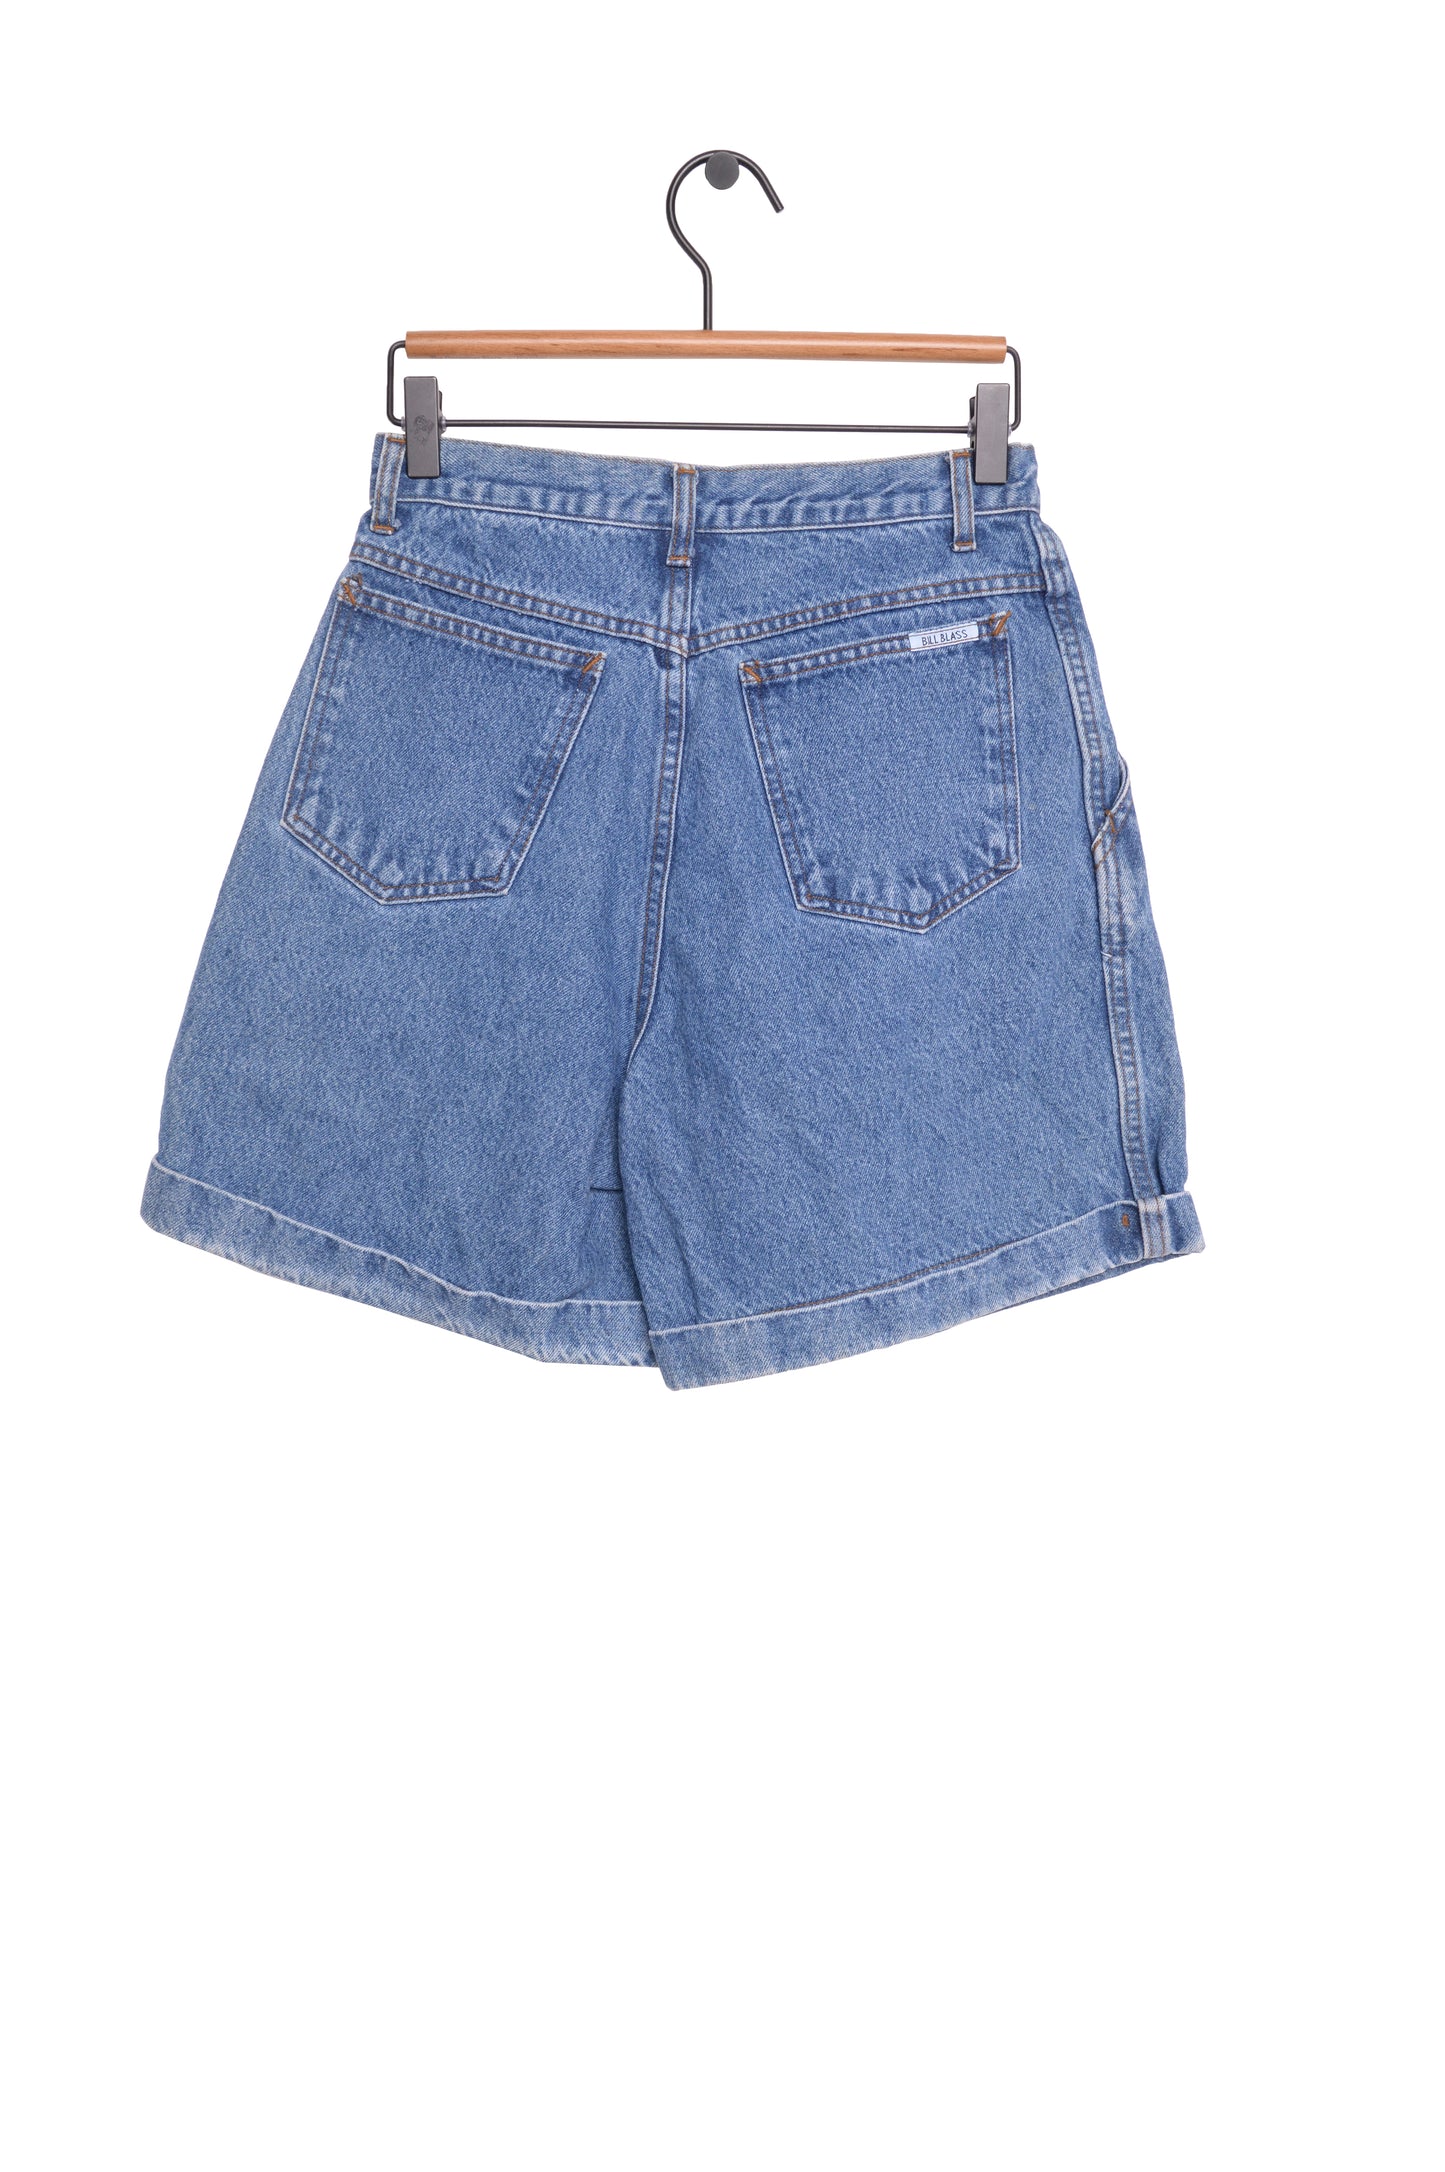 1980s Pleated Denim Shorts